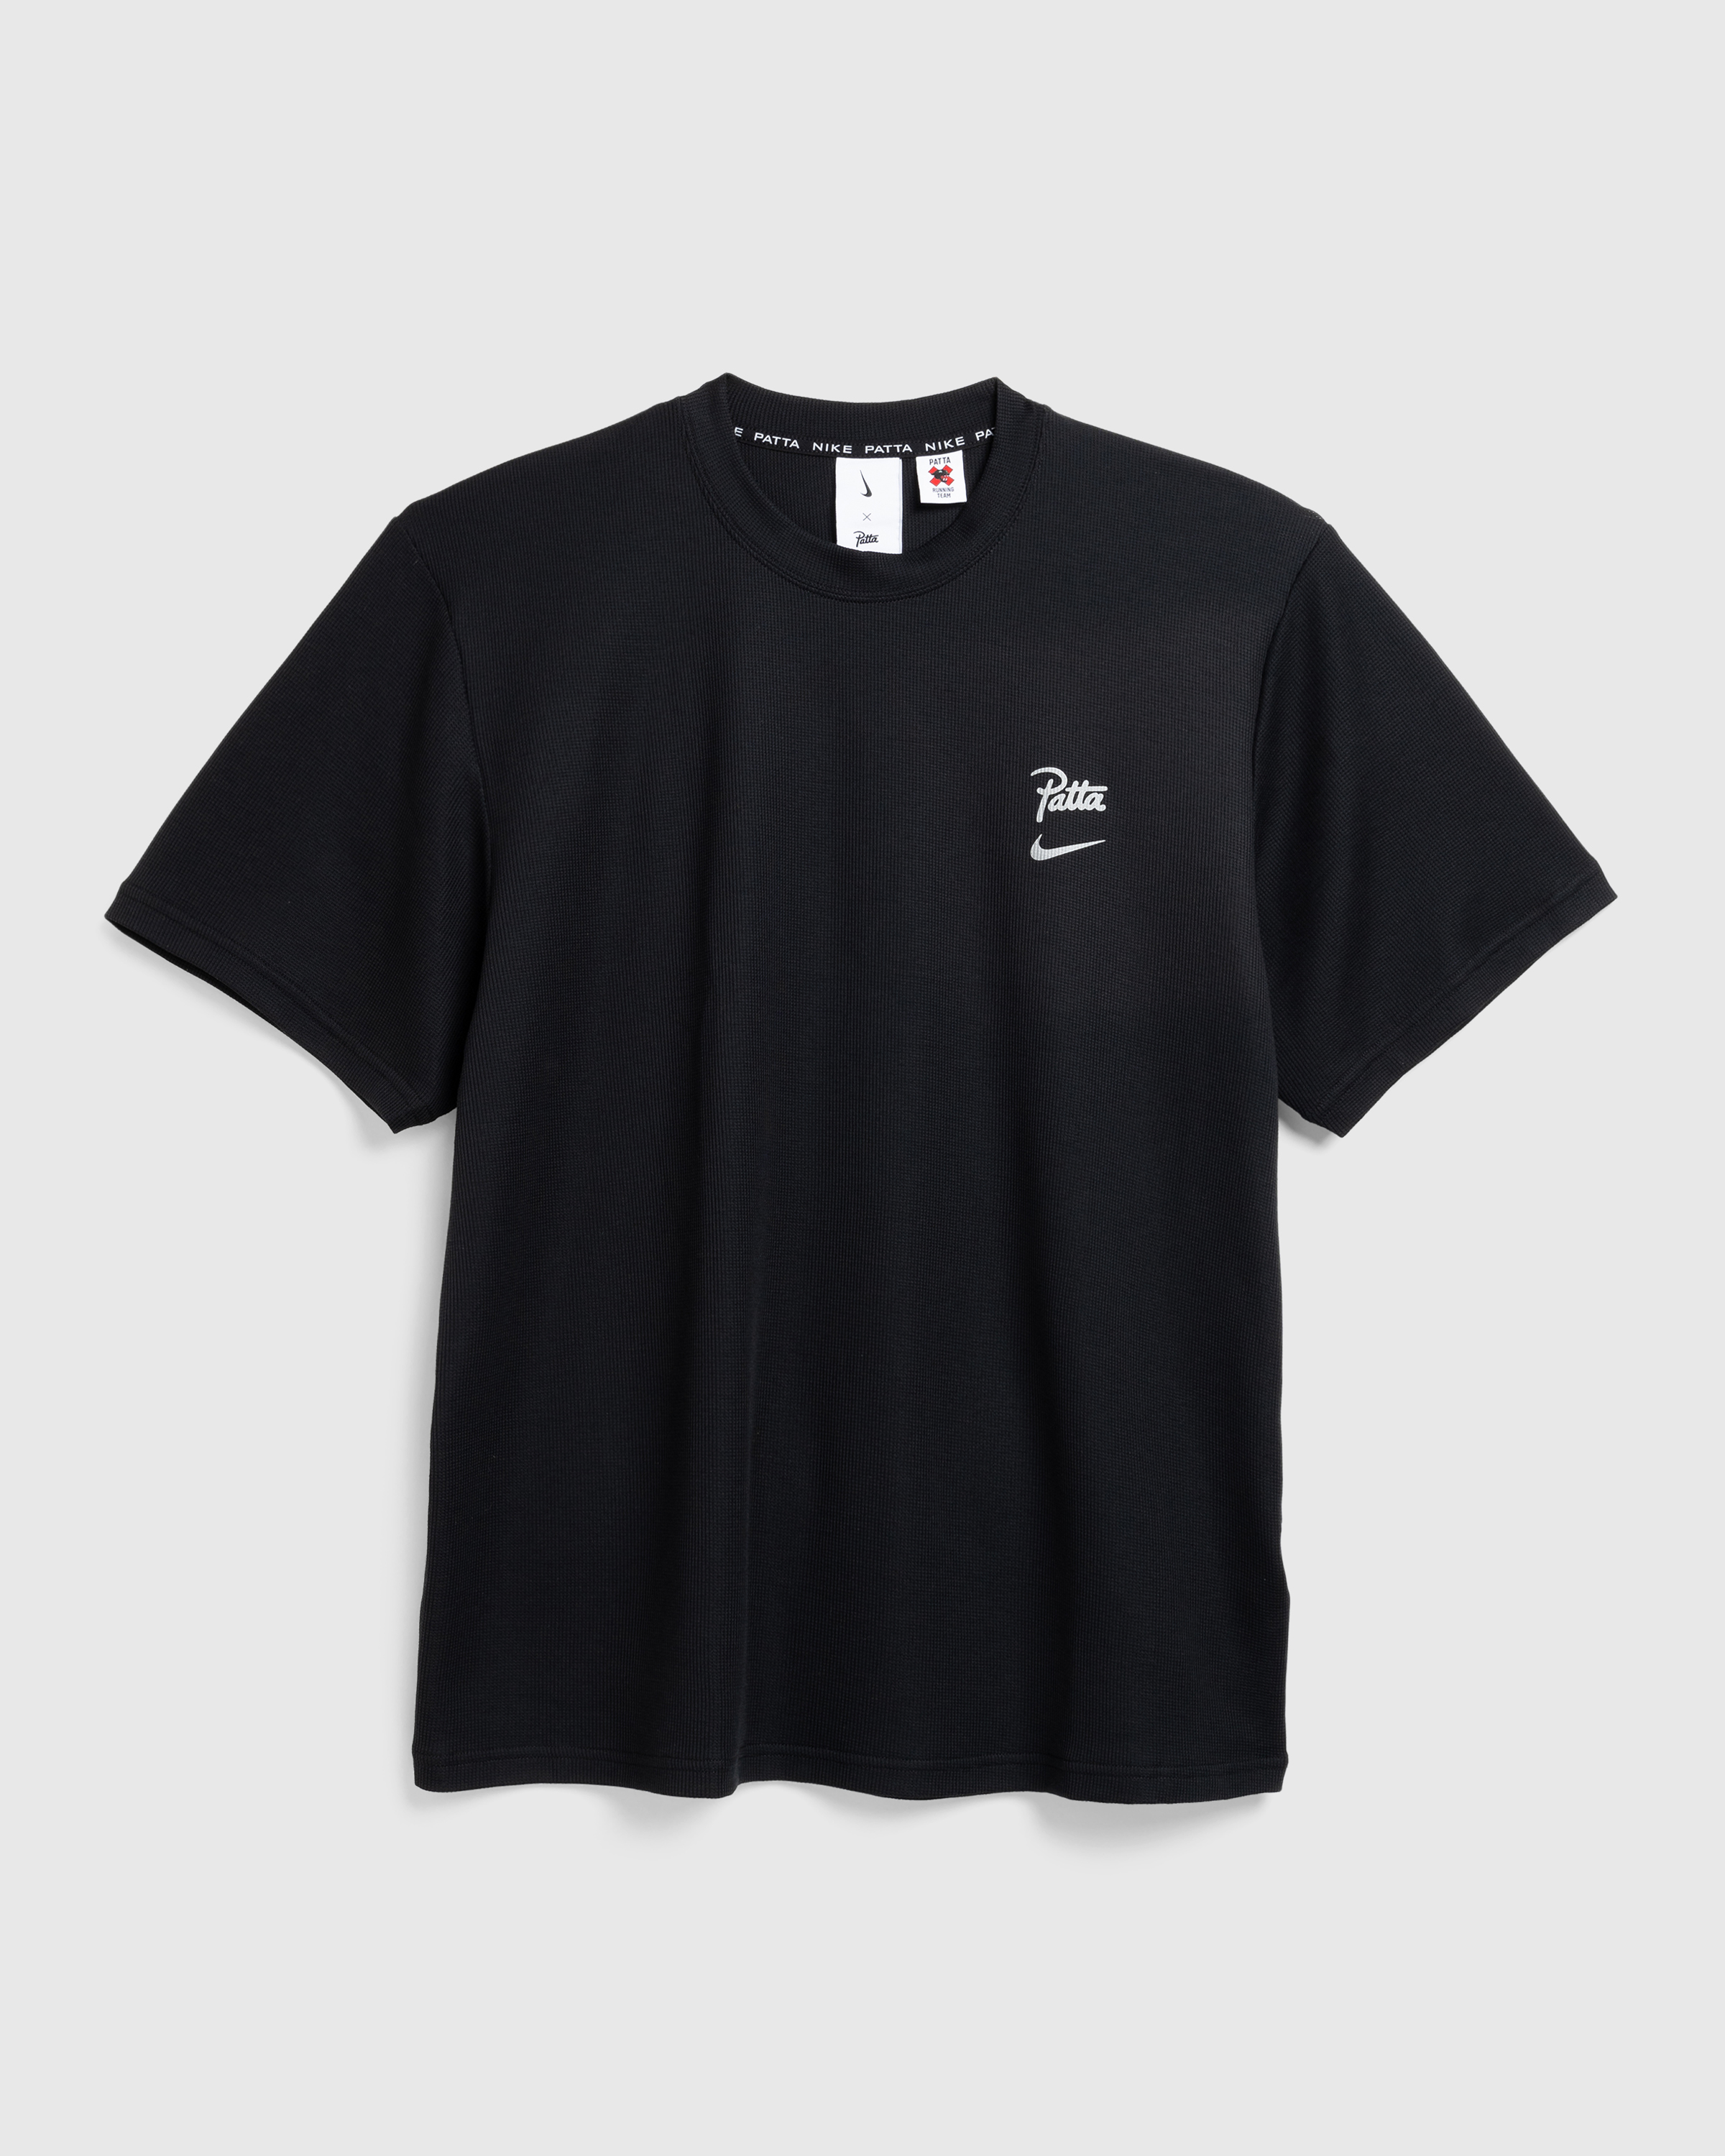 Nike x Patta – Running Team T-Shirt Black - T-Shirts - Black - Image 1